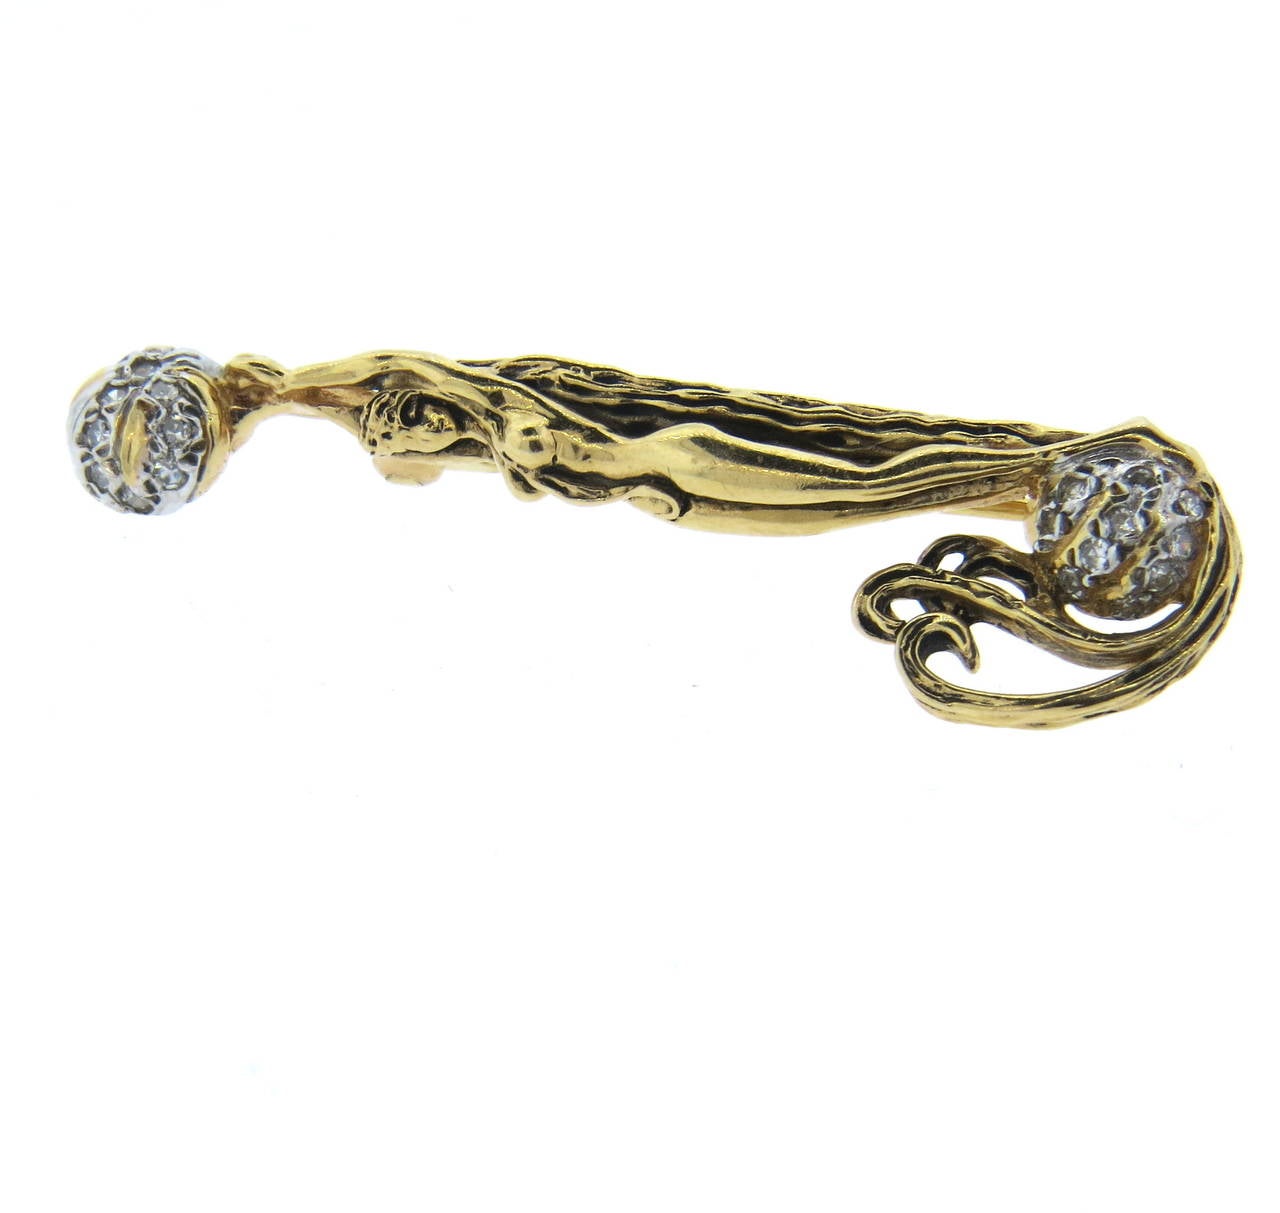 14k Gold Erte brooch with diamonds. Measuring 41mm x 14mm. marked Erte,CFA,14k. weight - 4.8 grams